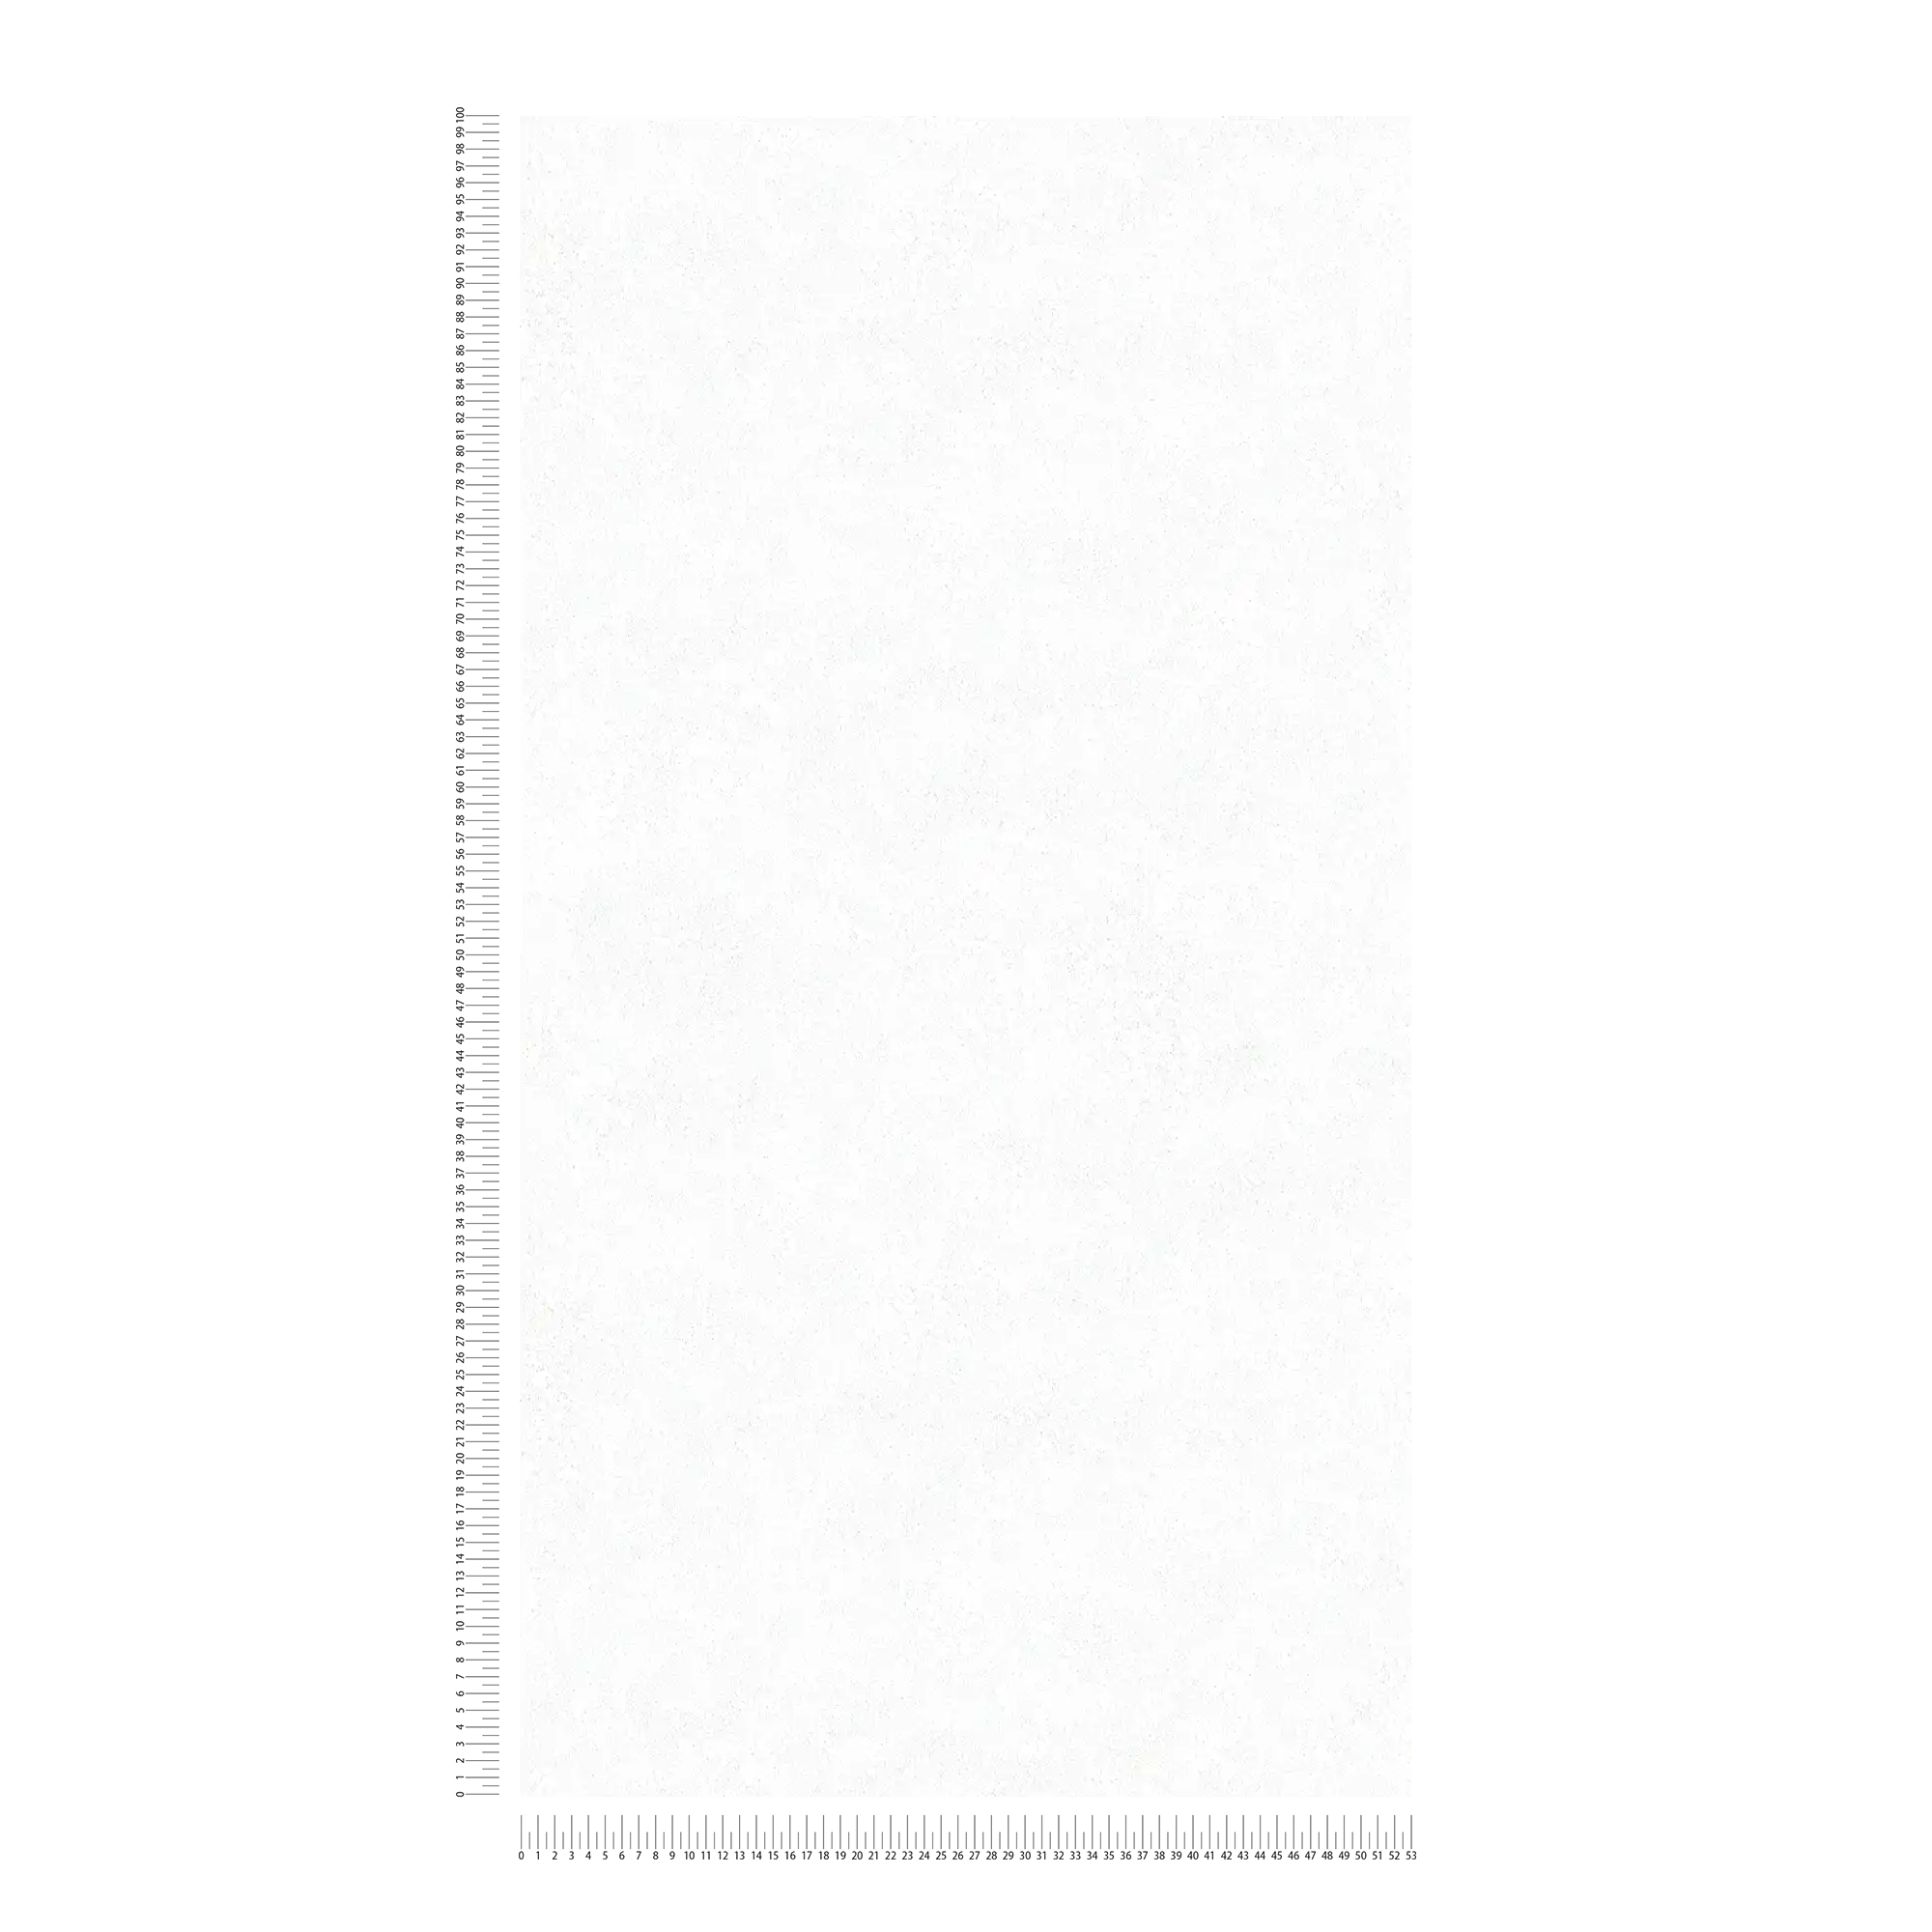             Carta da parati unitaria con struttura superficiale finemente screziata - bianco
        